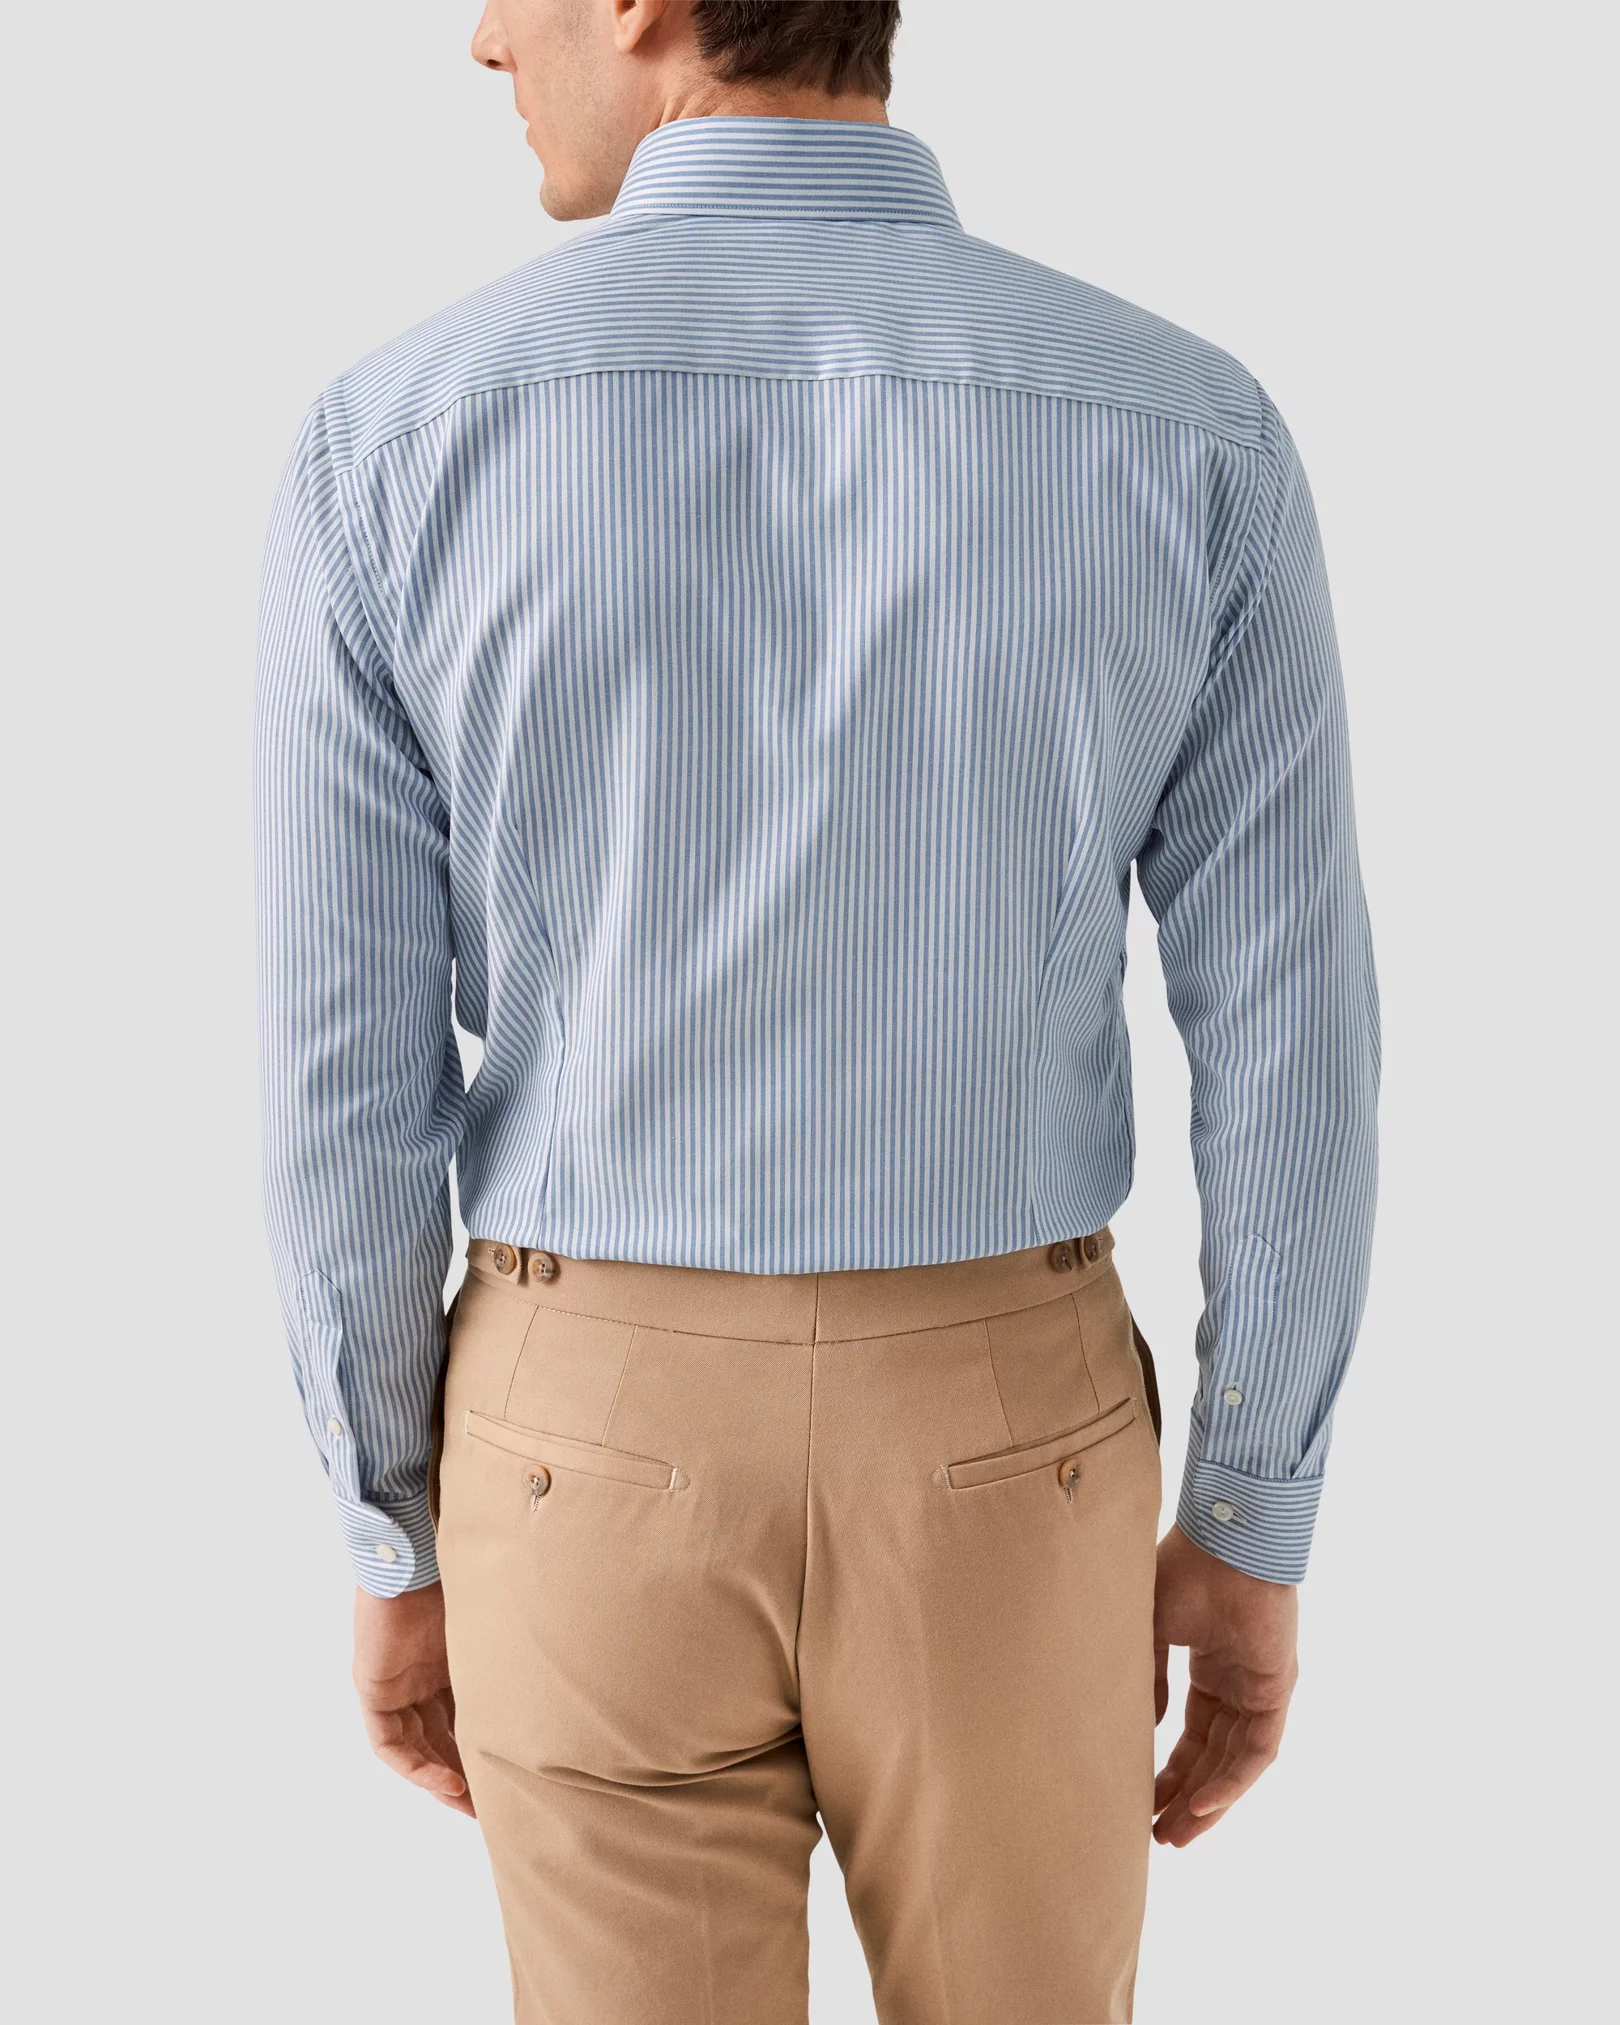 Eton - Mid Blue Bengal Striped Signature Oxford Shirt